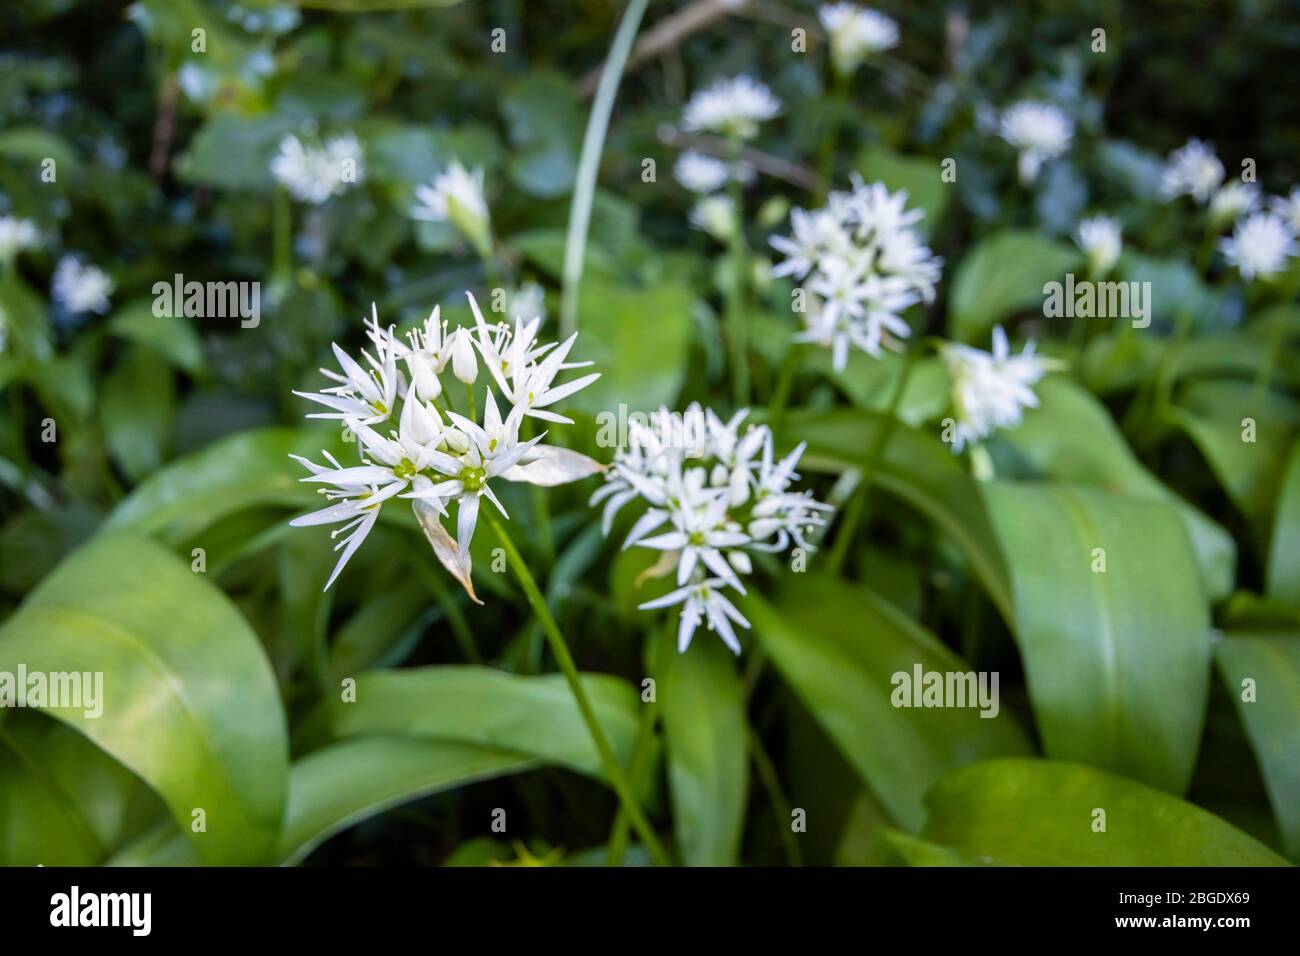 Pungent, delicate white wild garlic (Allium ursinum) in flower in spring, Surrey, south-east England - close-up view Stock Photo